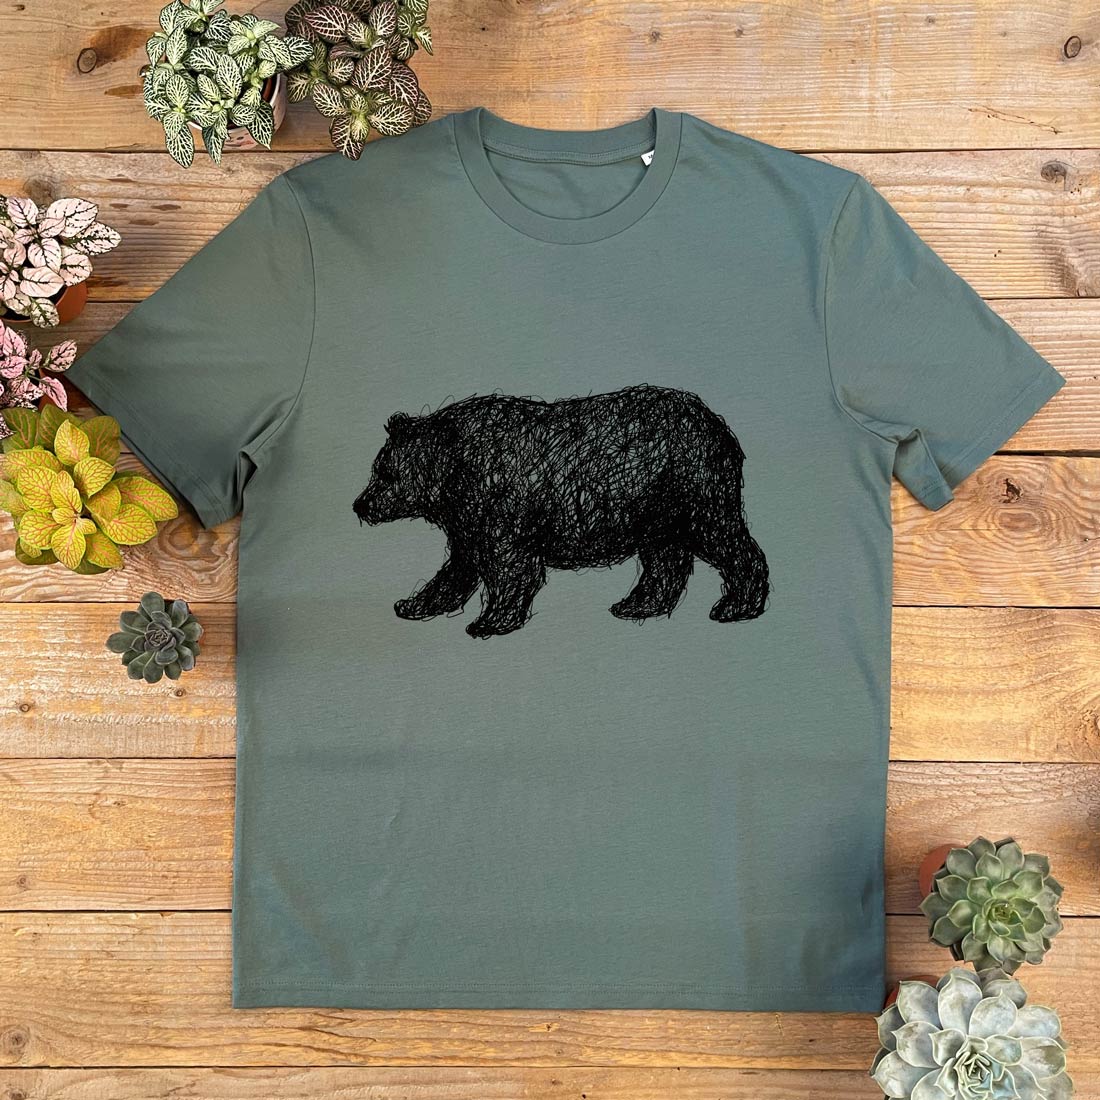 tshirt with large bear walking